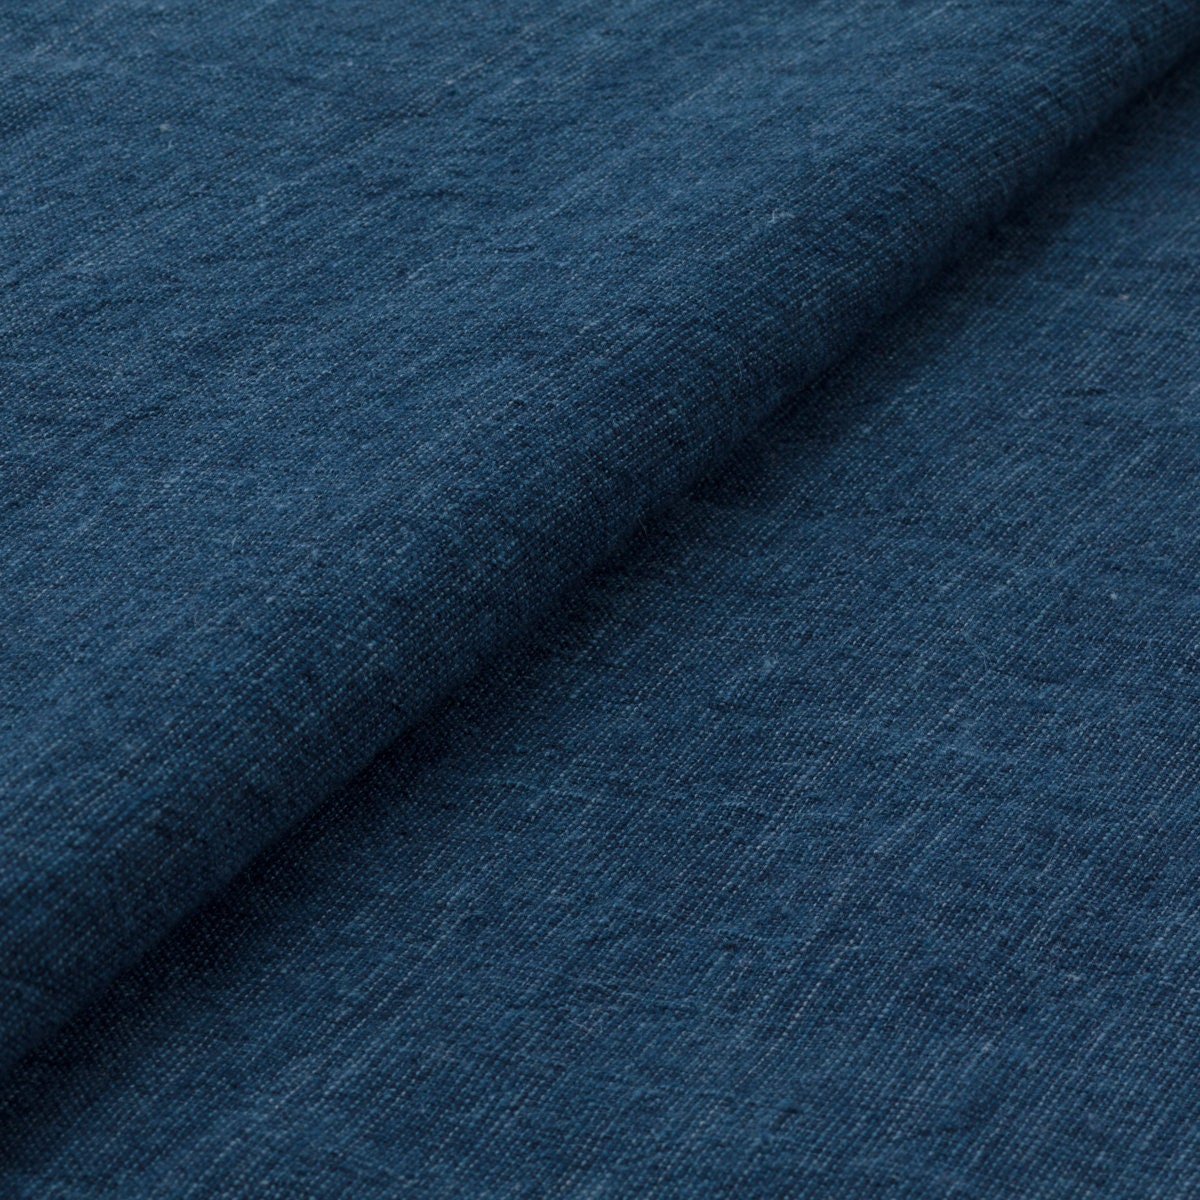 Cotton hemp Shimofuri, Indigo cotton linen fabric, Japan Aizome